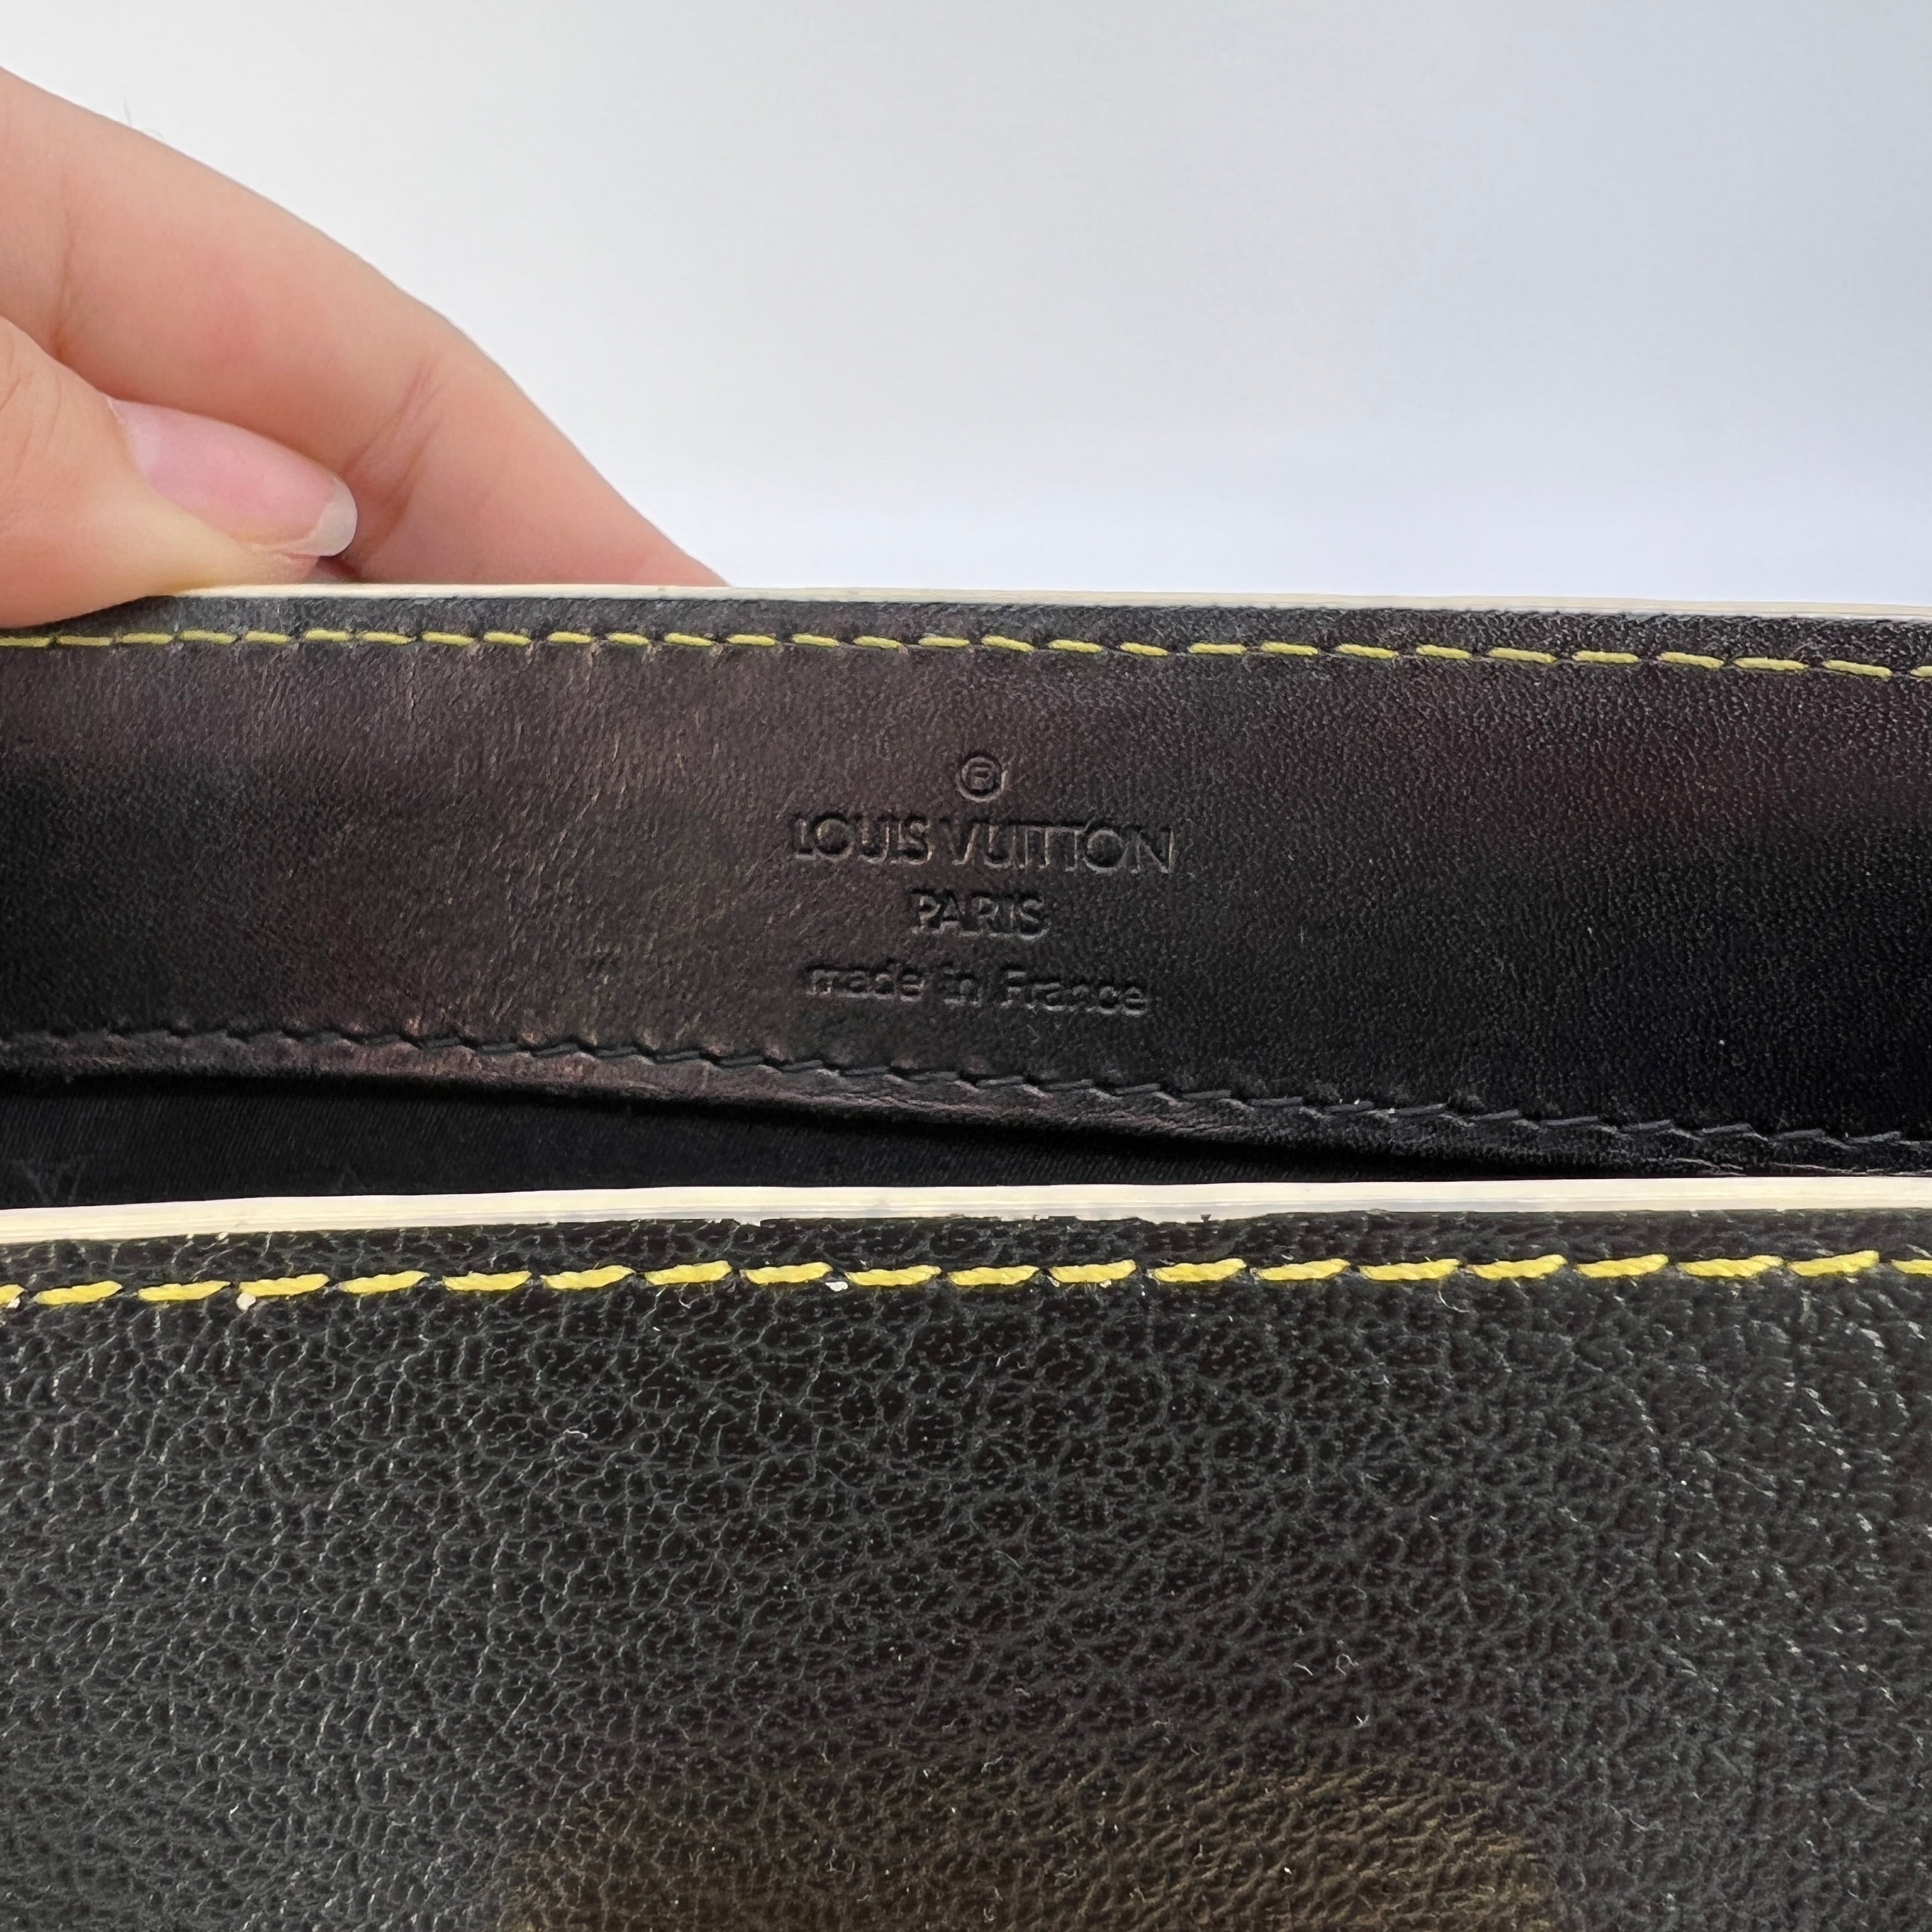 Louis Vuitton Black Leather Handbags & Purses for Women, Authenticity  Guaranteed